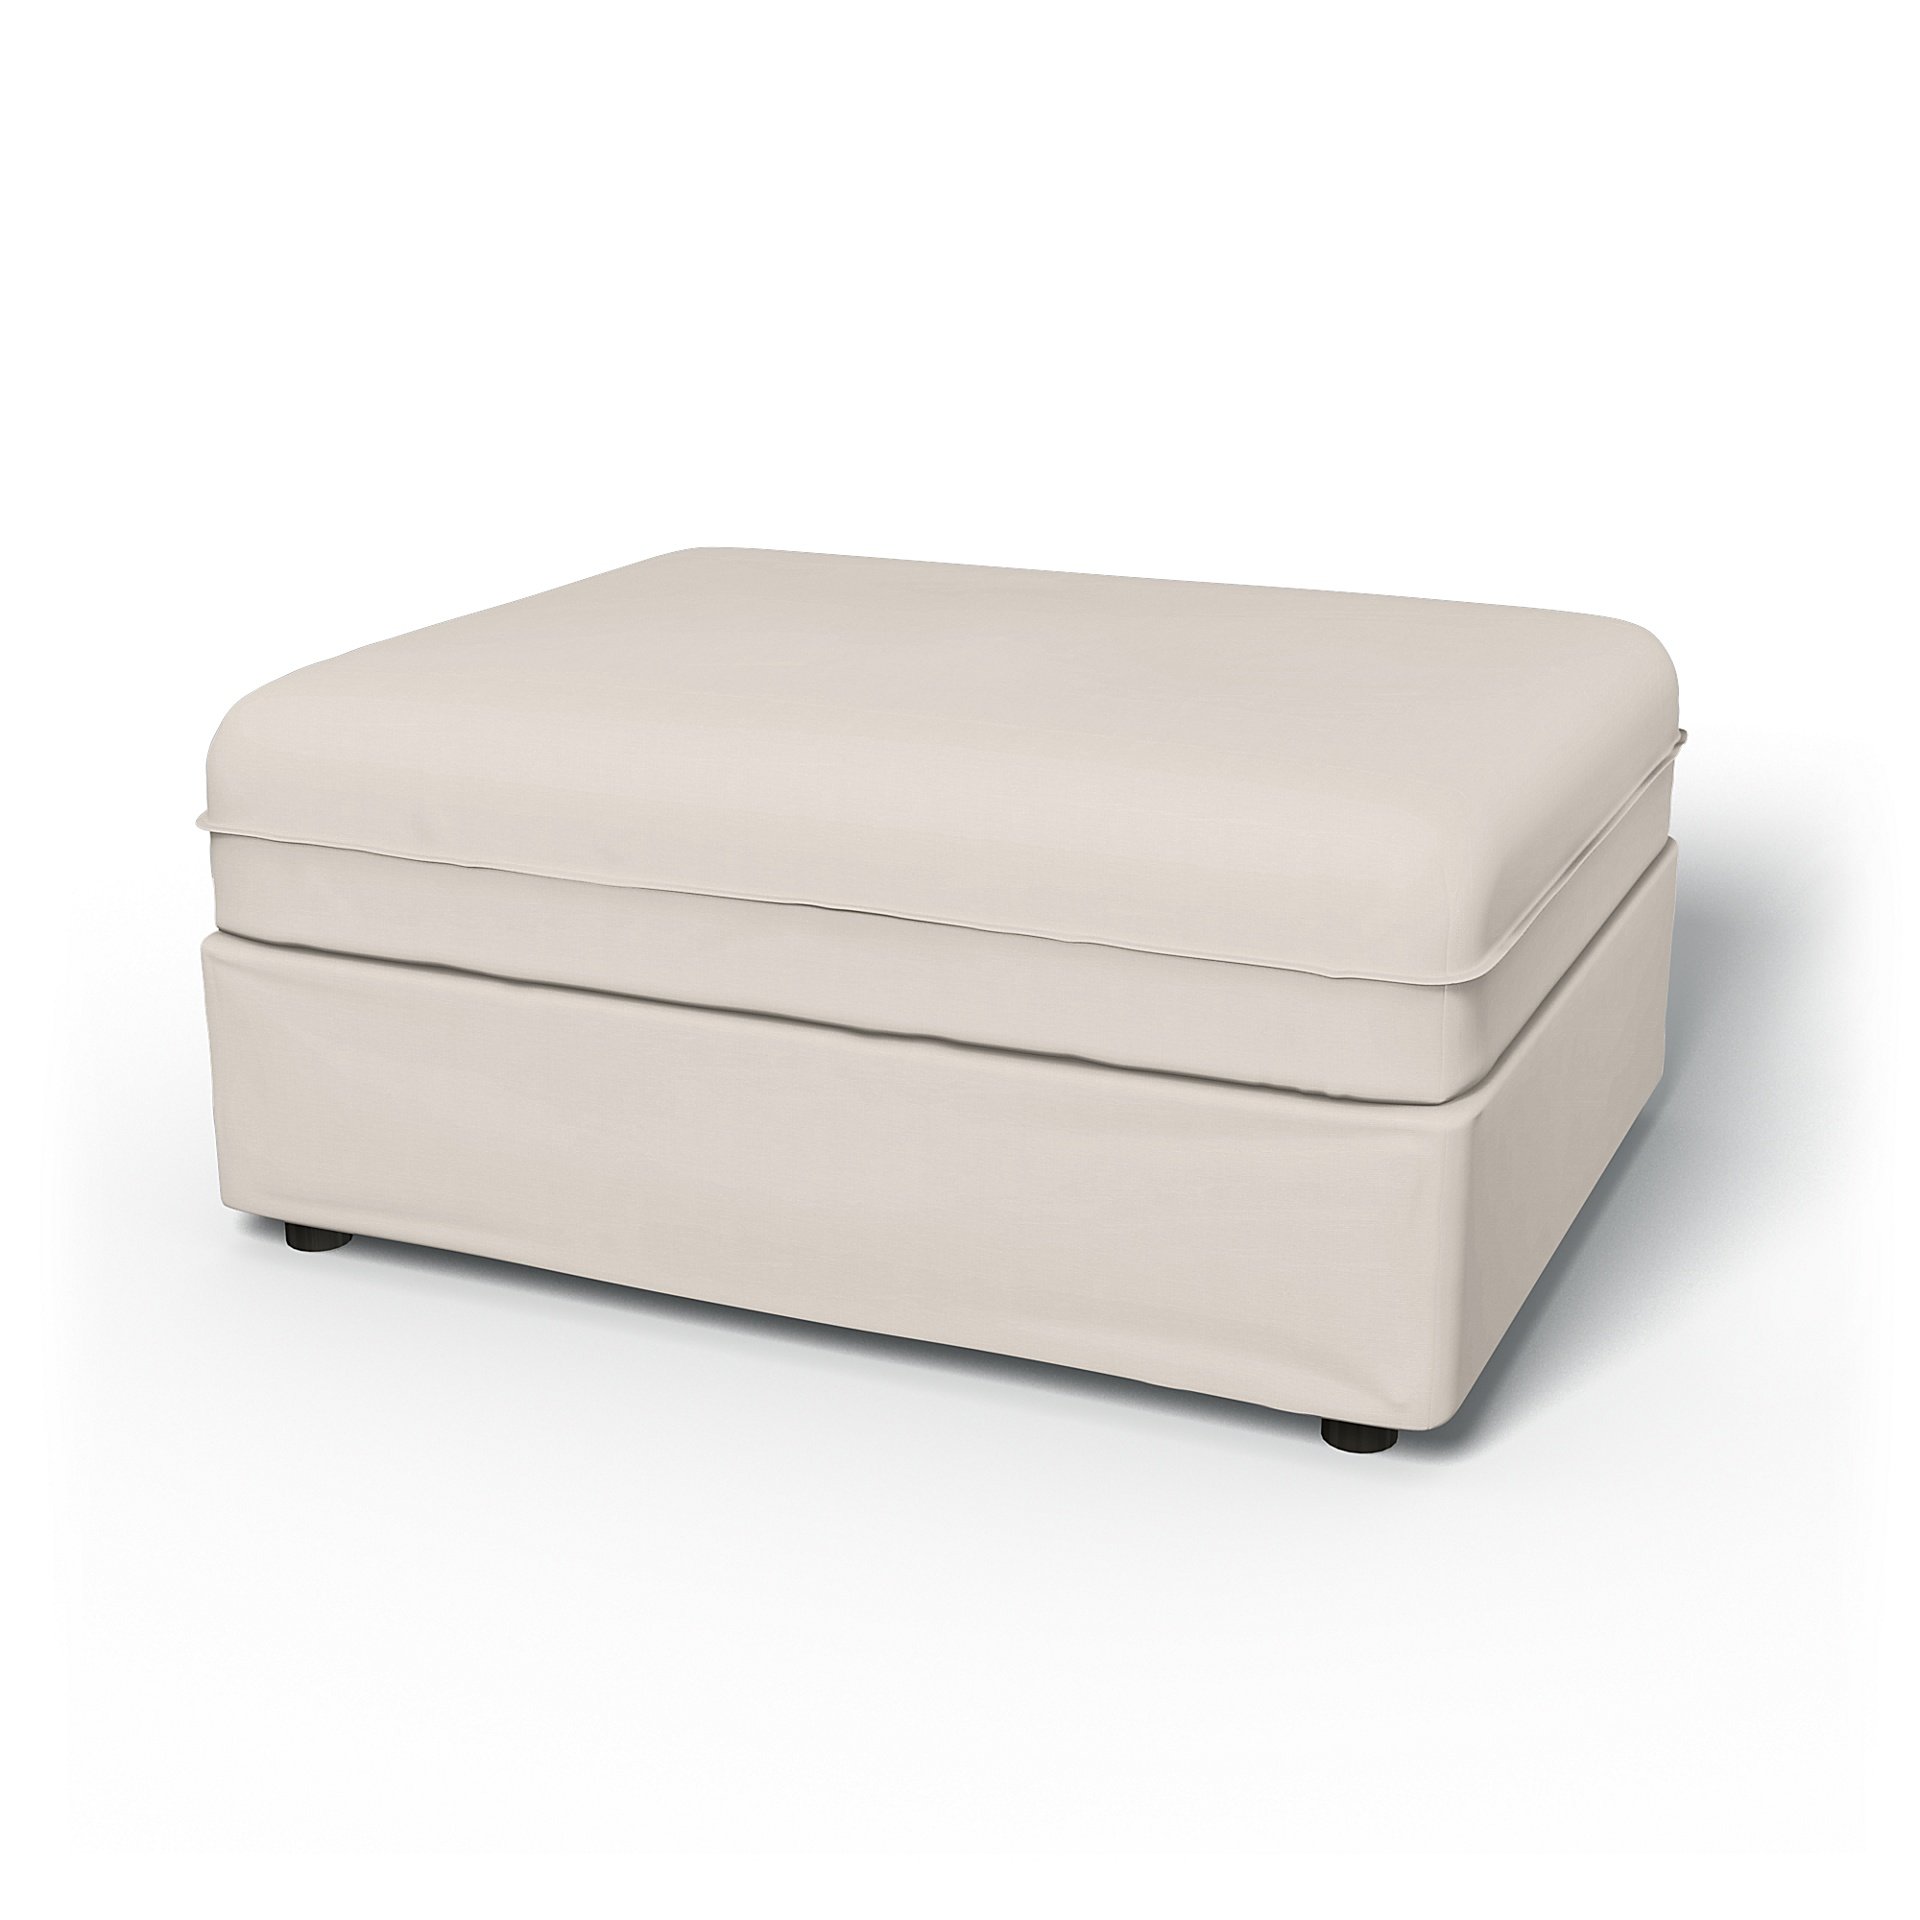 IKEA - Vallentuna Seat Module Cover 100x80cm 39x32in, Soft White, Cotton - Bemz